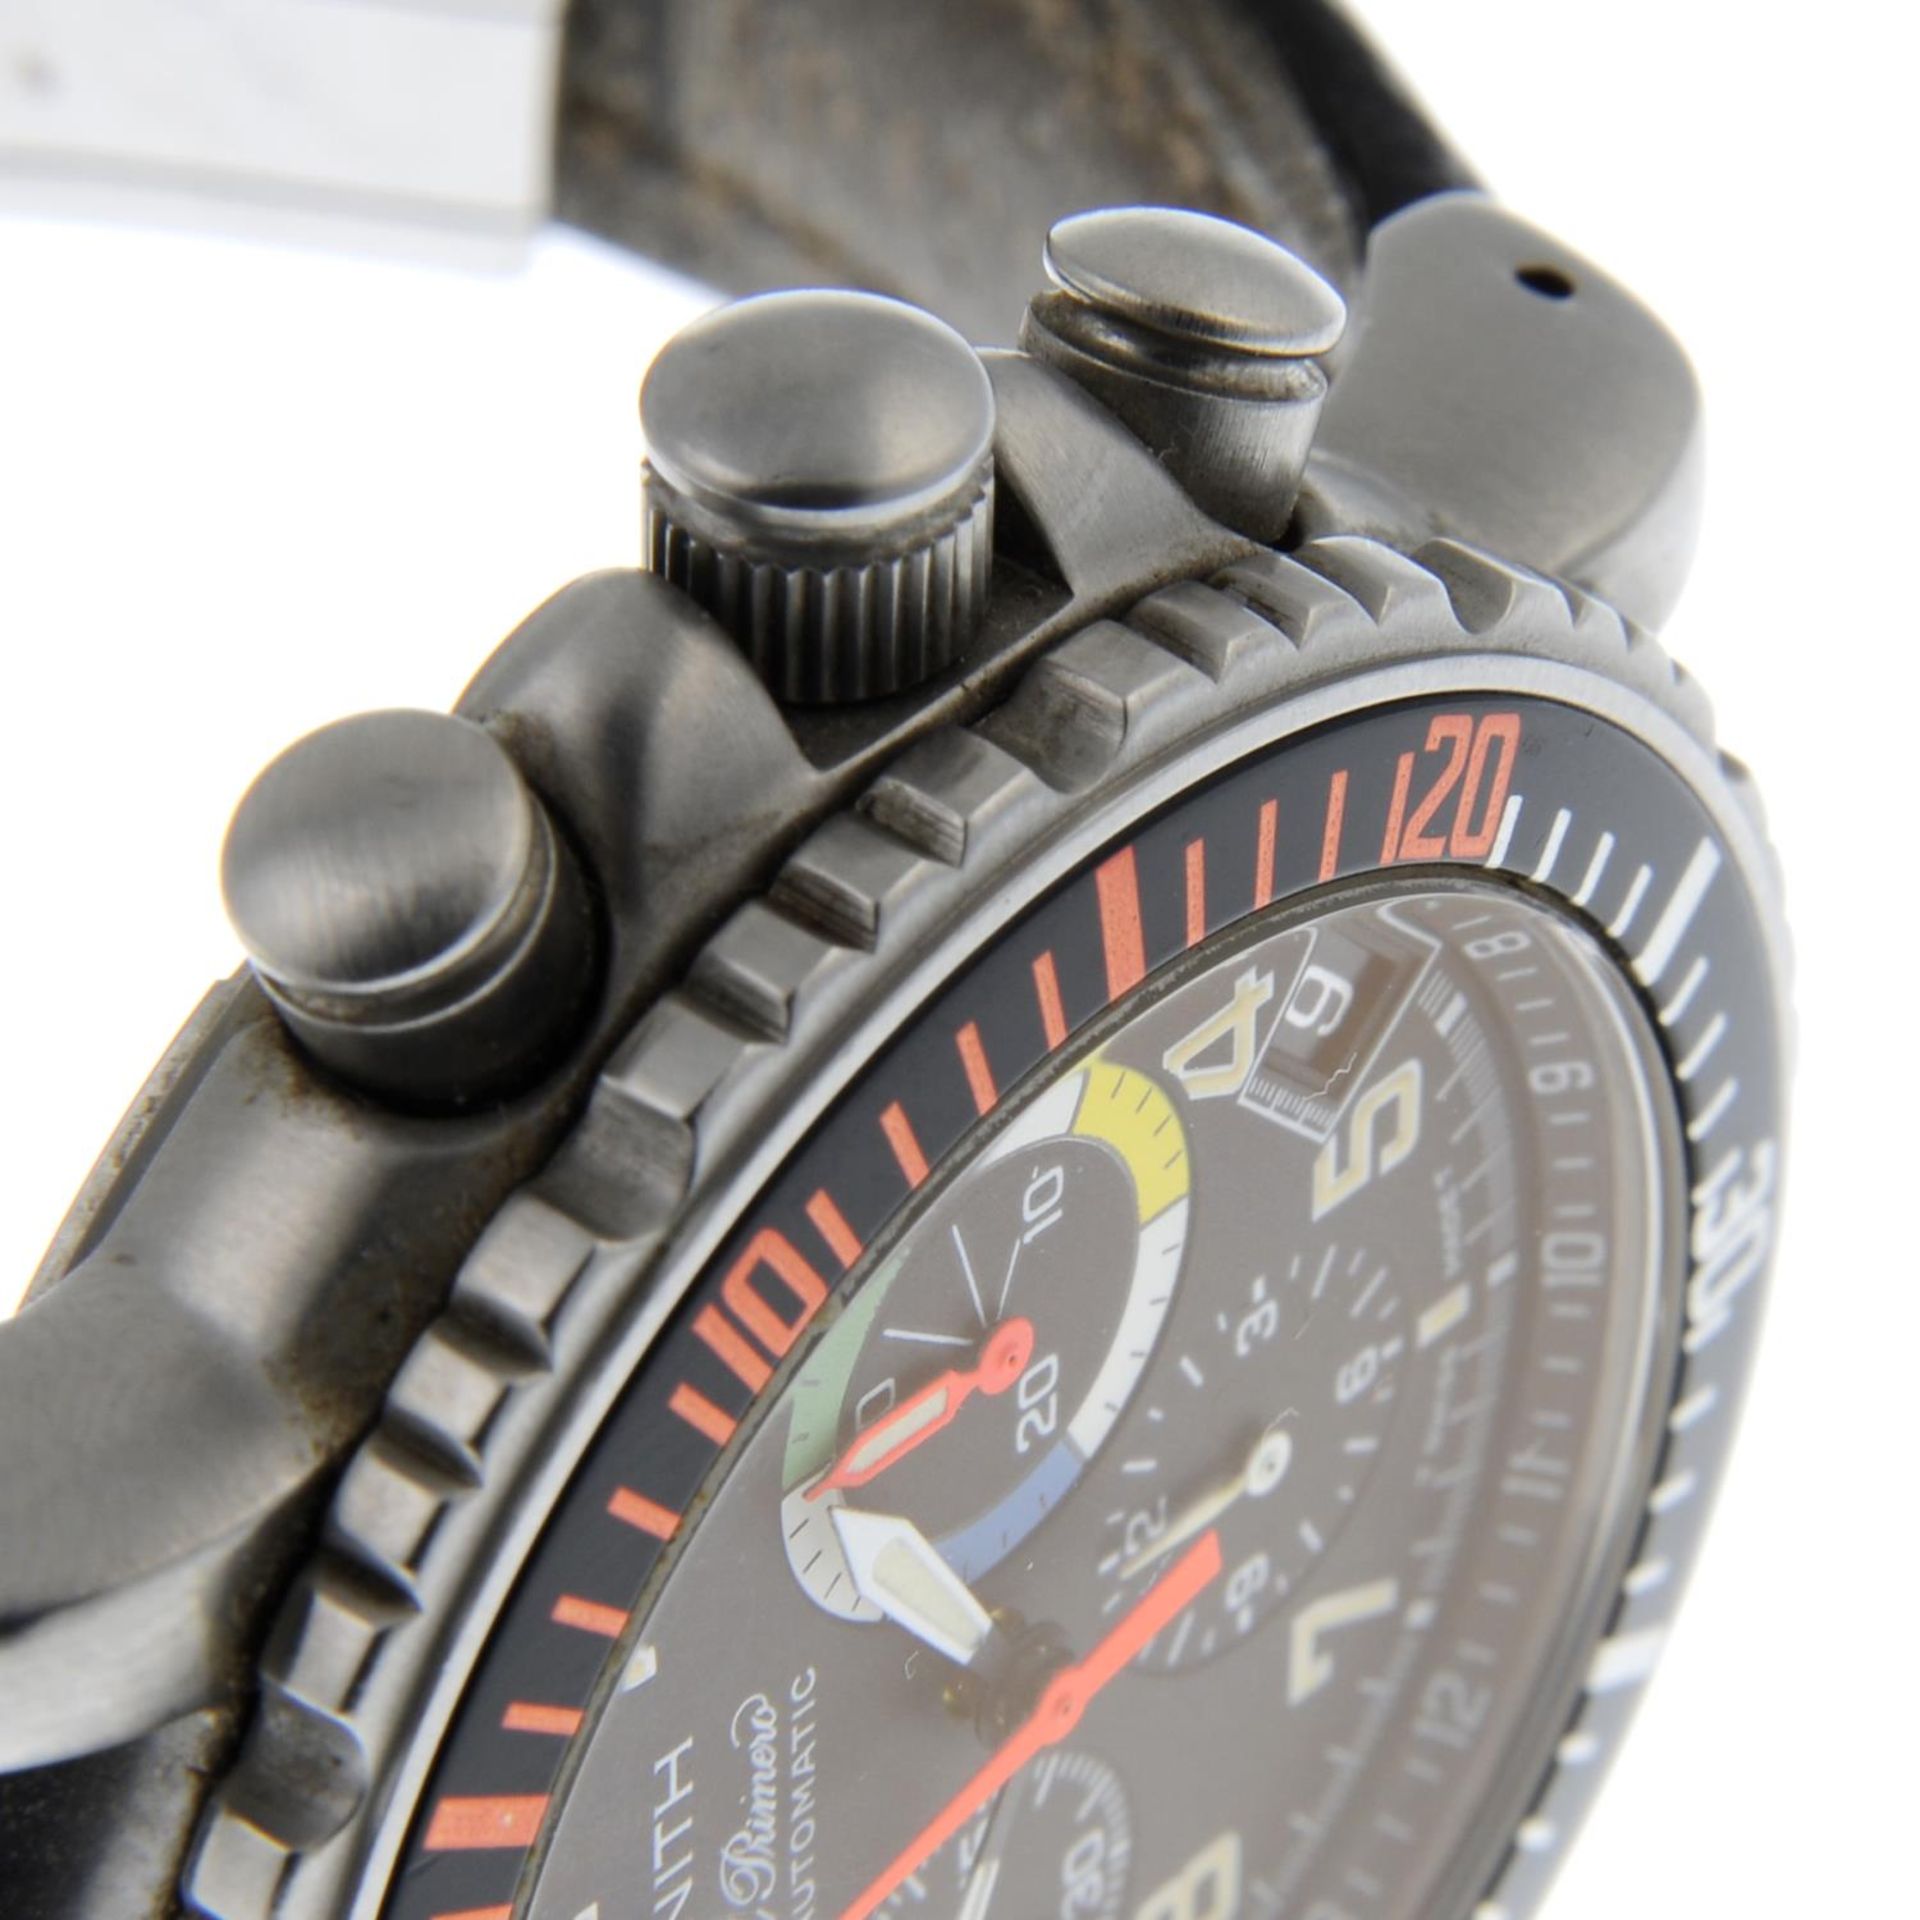 ZENITH - an El Primero Rainbow Fly-back chronograph wrist watch. - Image 5 of 5